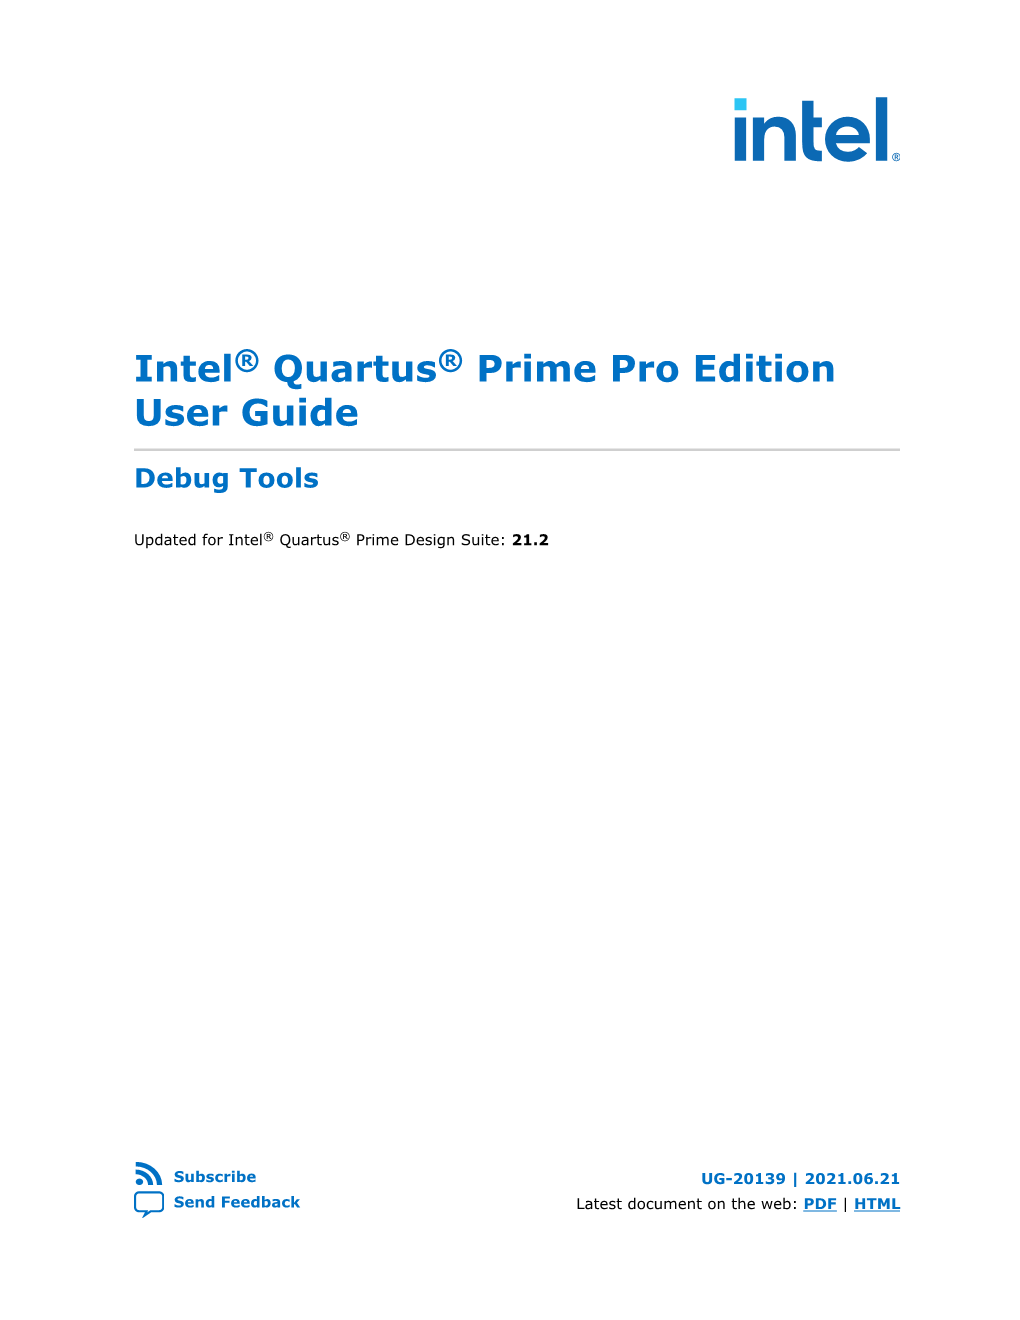 Intel Quartus Prime Pro Edition User Guide: Debug Tools Send Feedback